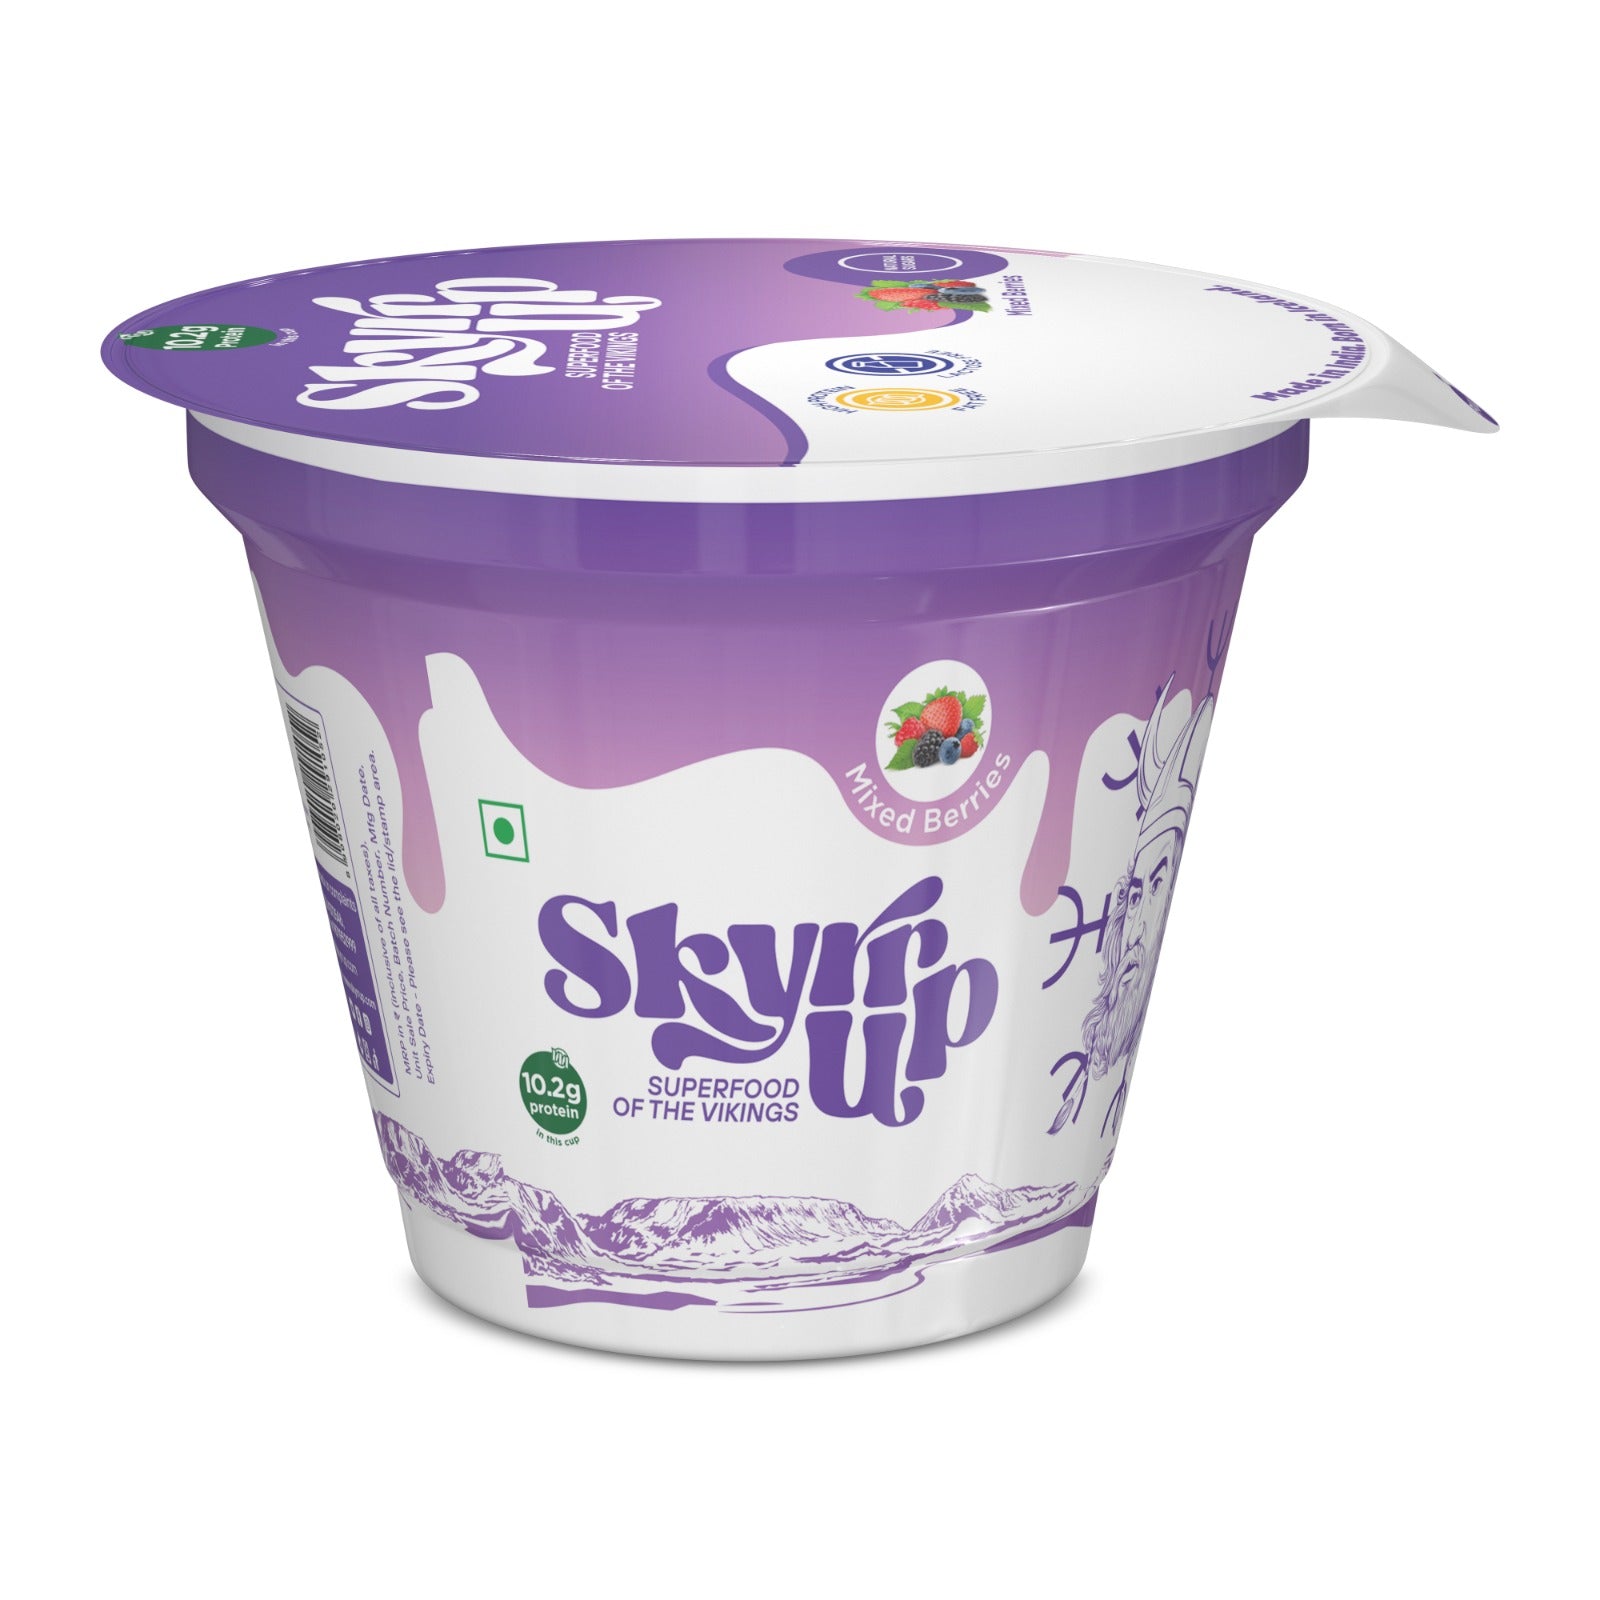 Skyr made from A2 Milk